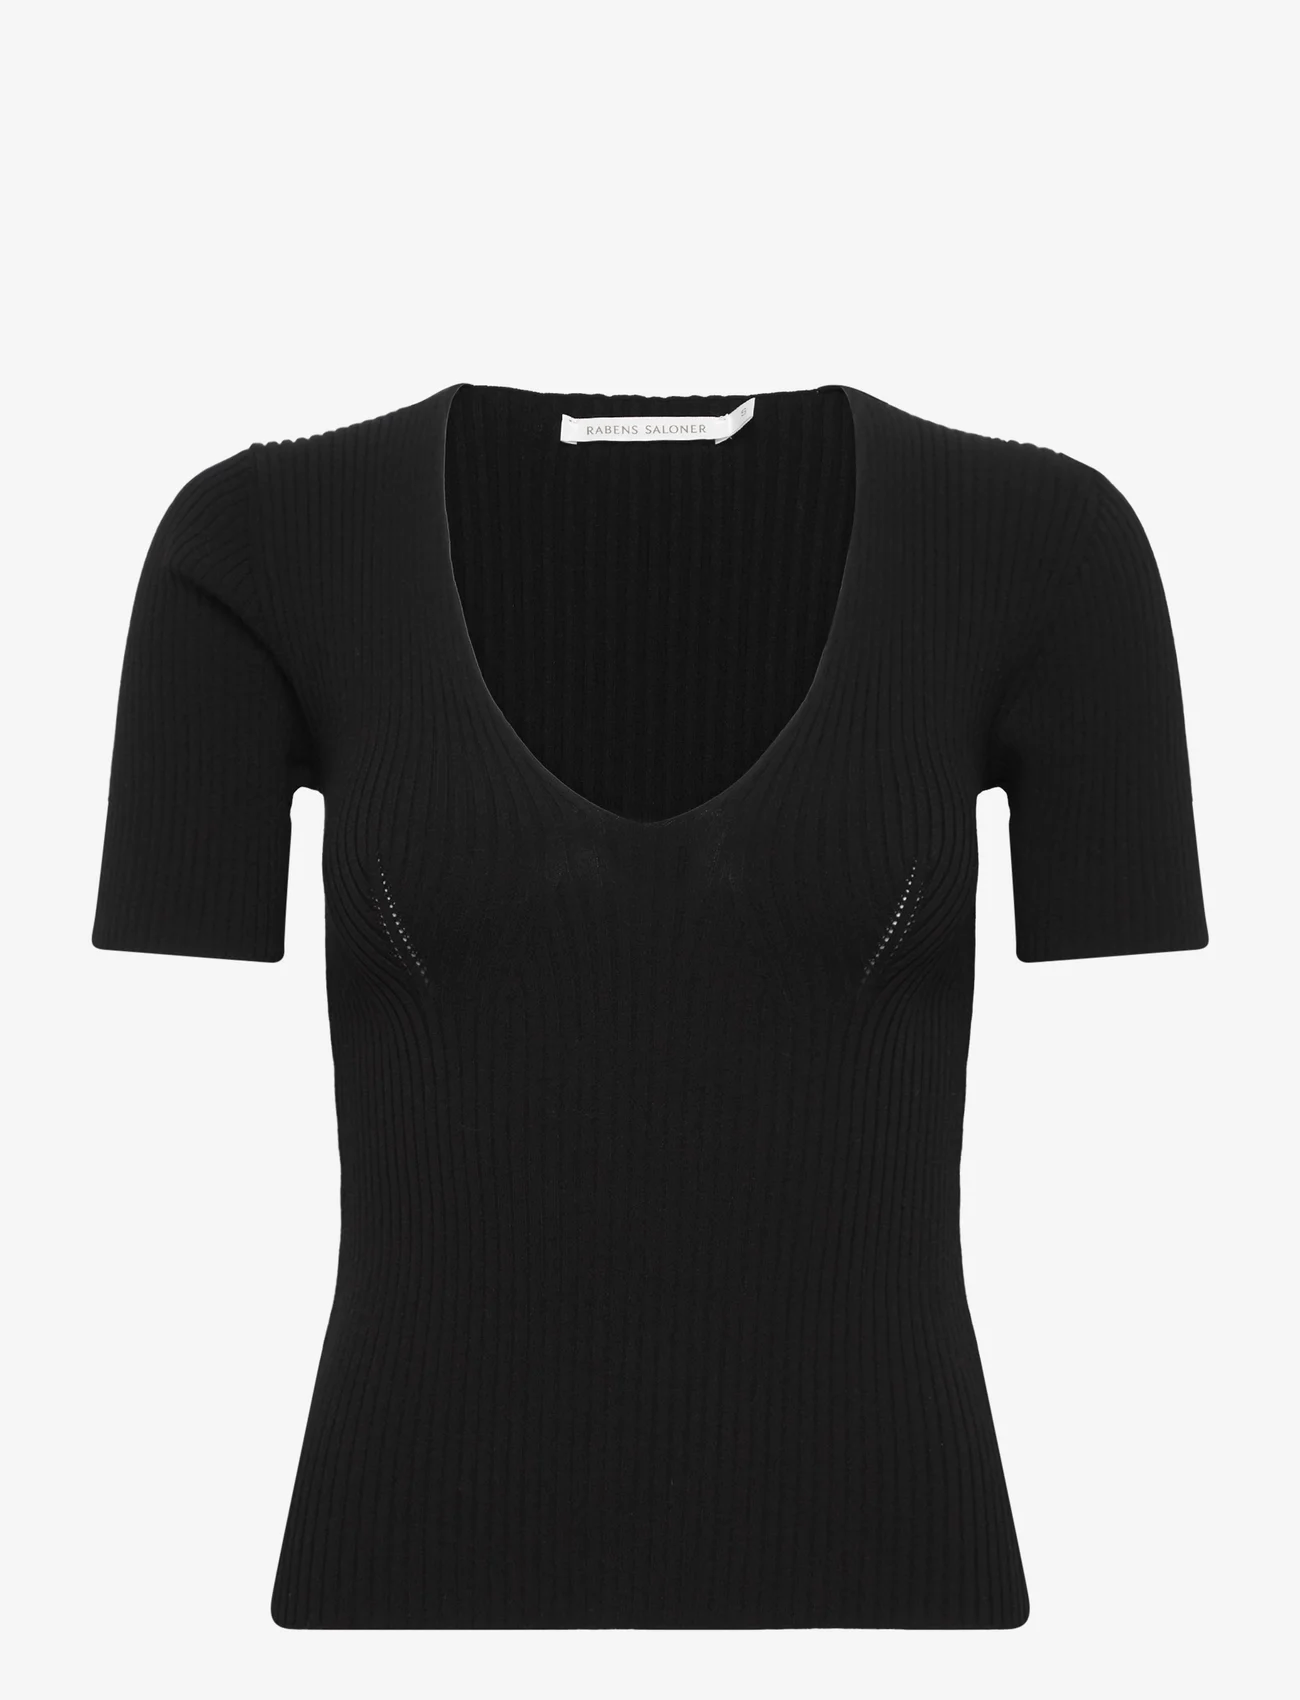 Rabens Saloner - Fabia - Contour knit short slv. top - t-shirt & tops - black - 0